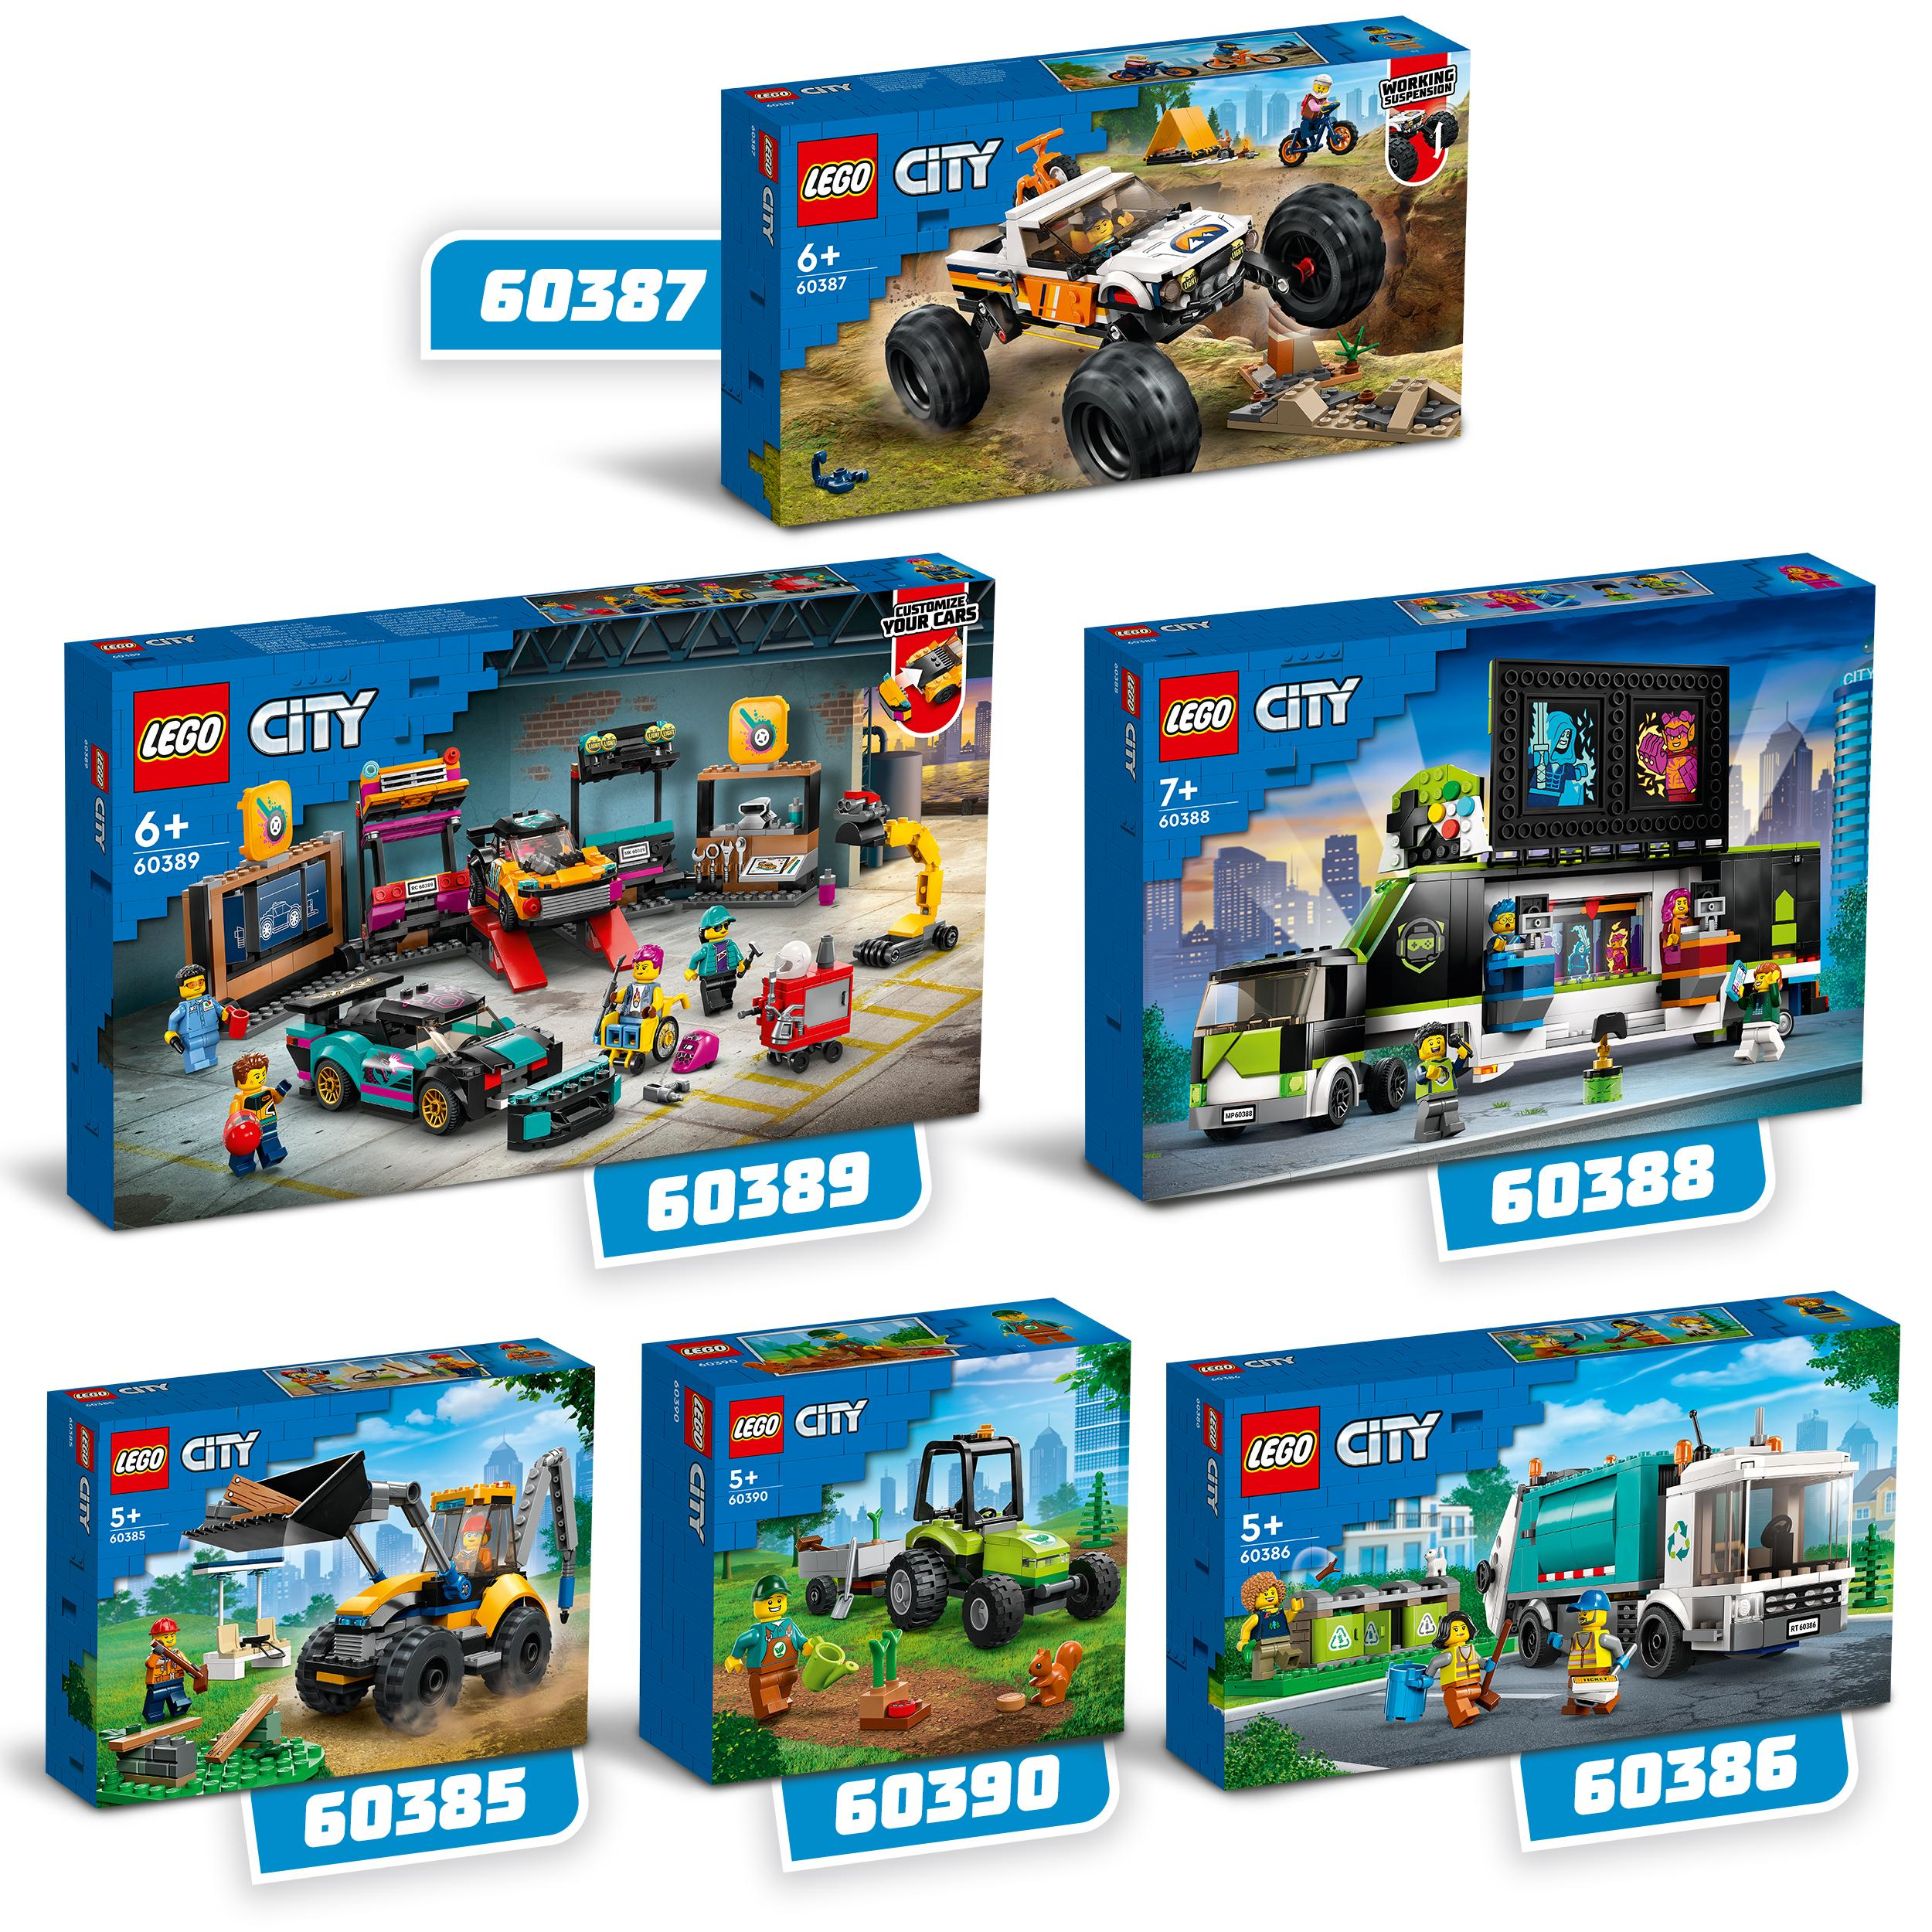 LEGO City 60390 Kleintraktor Mehrfarbig Bausatz